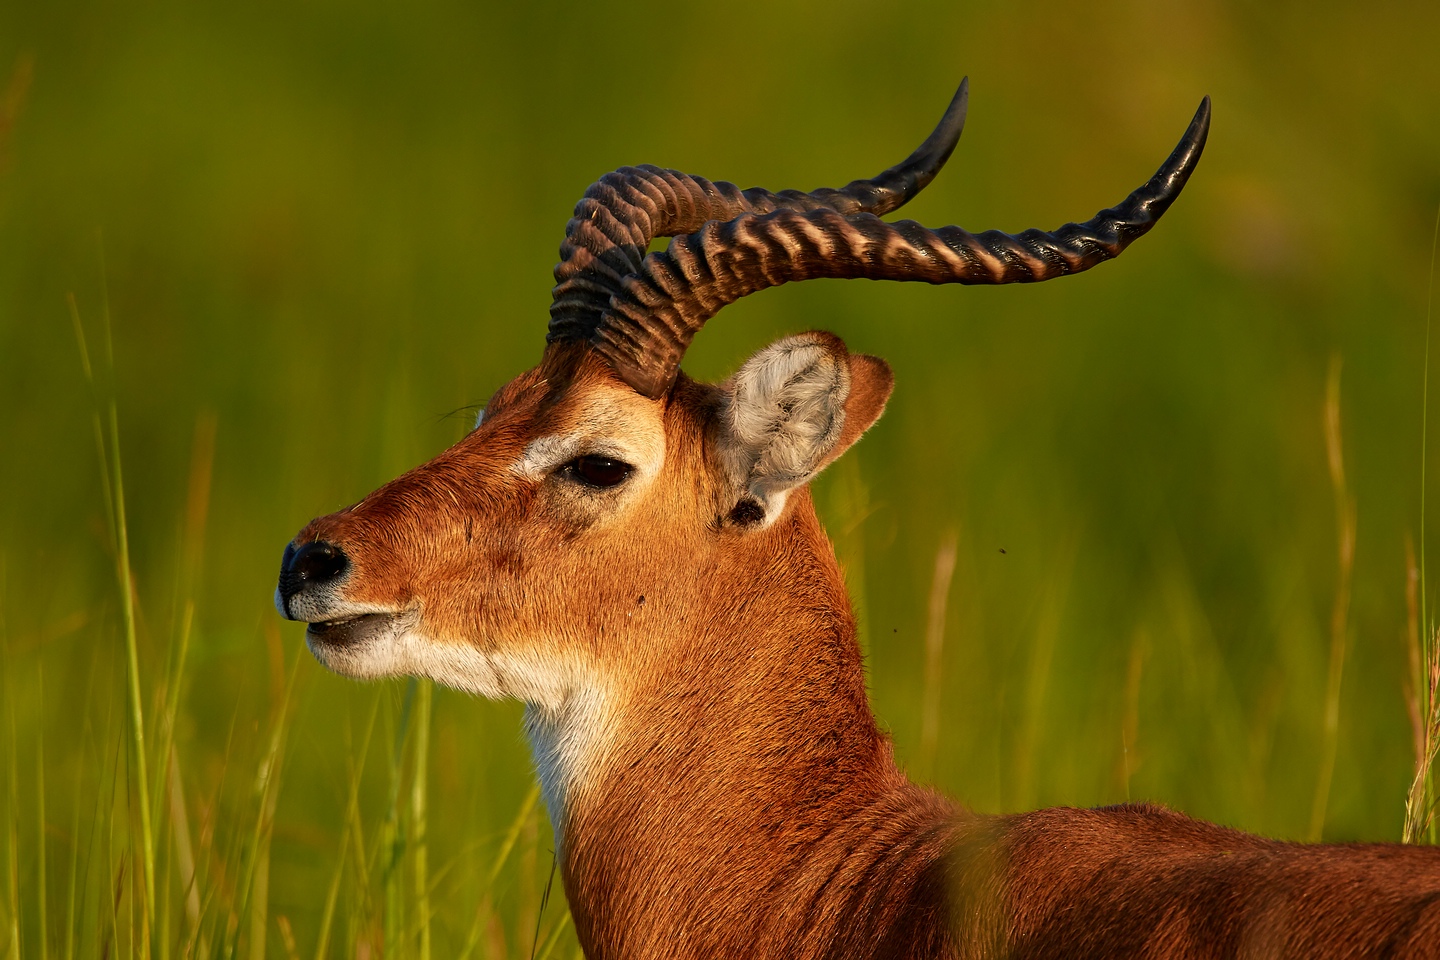 Uganda-Grasantilope